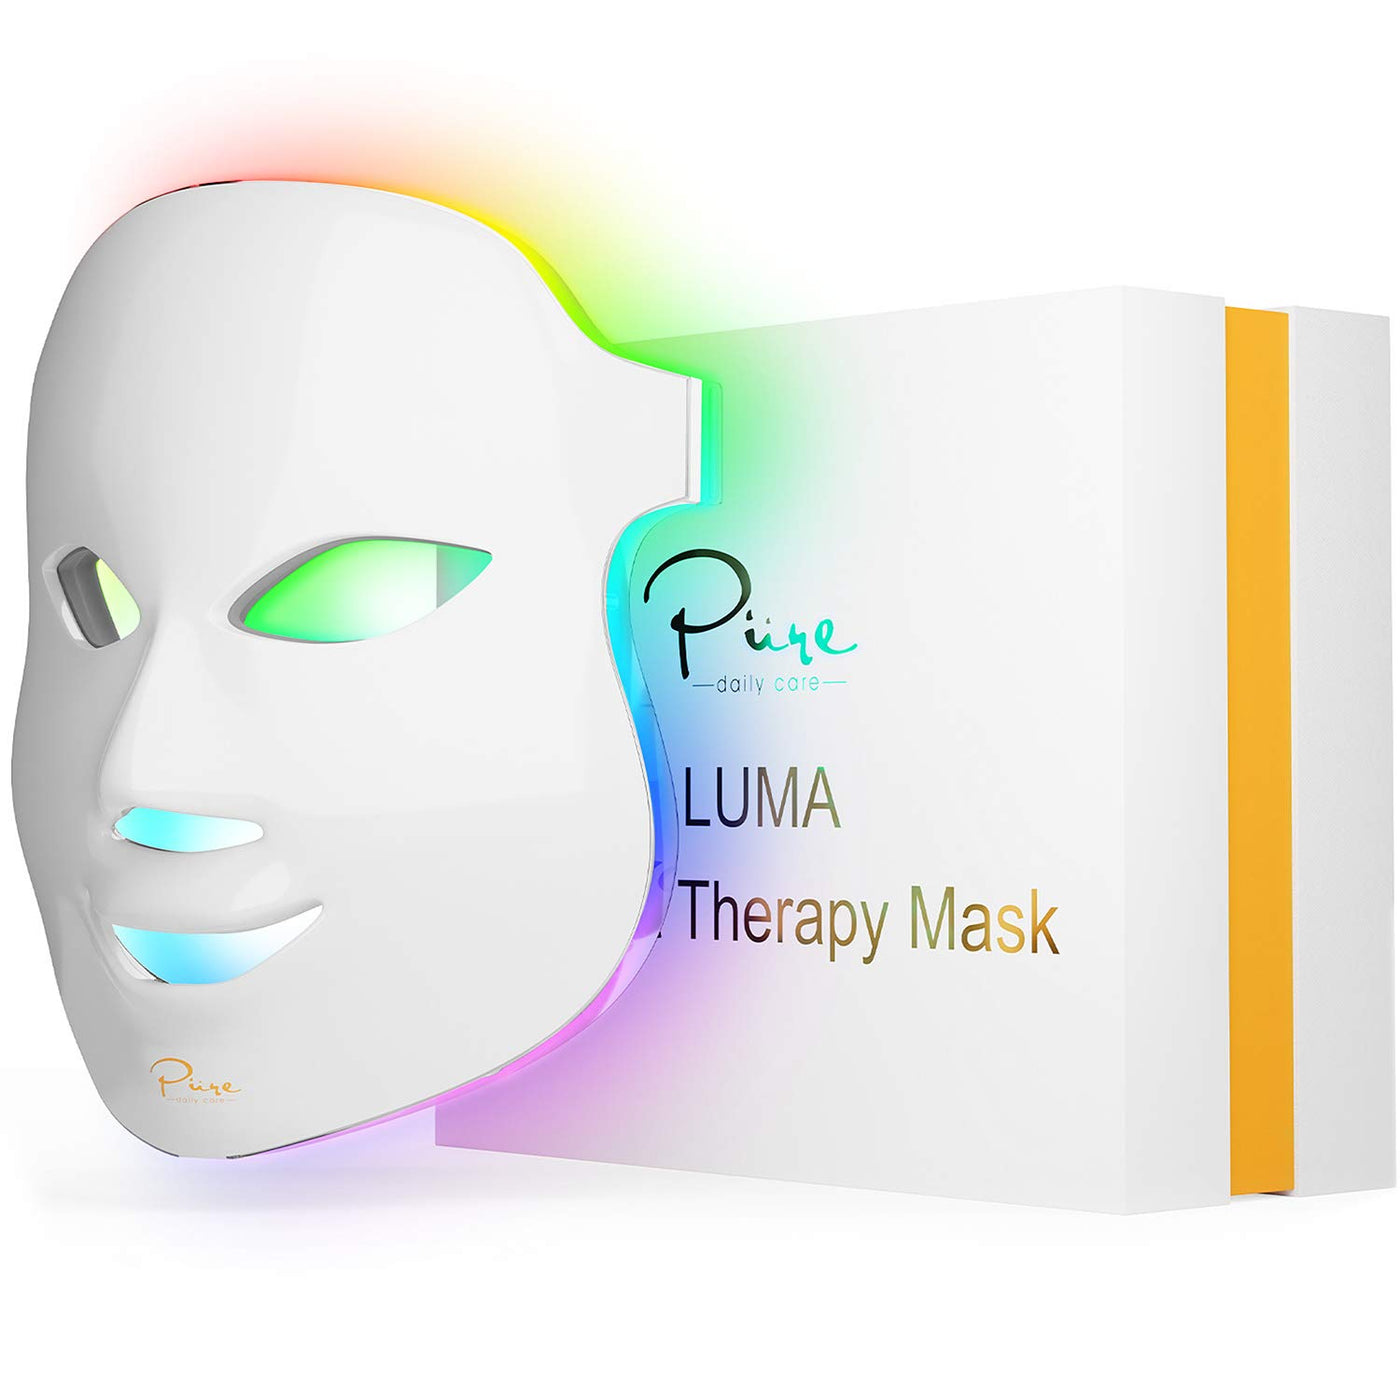 LUMA Light LED Therapy Facial Mask